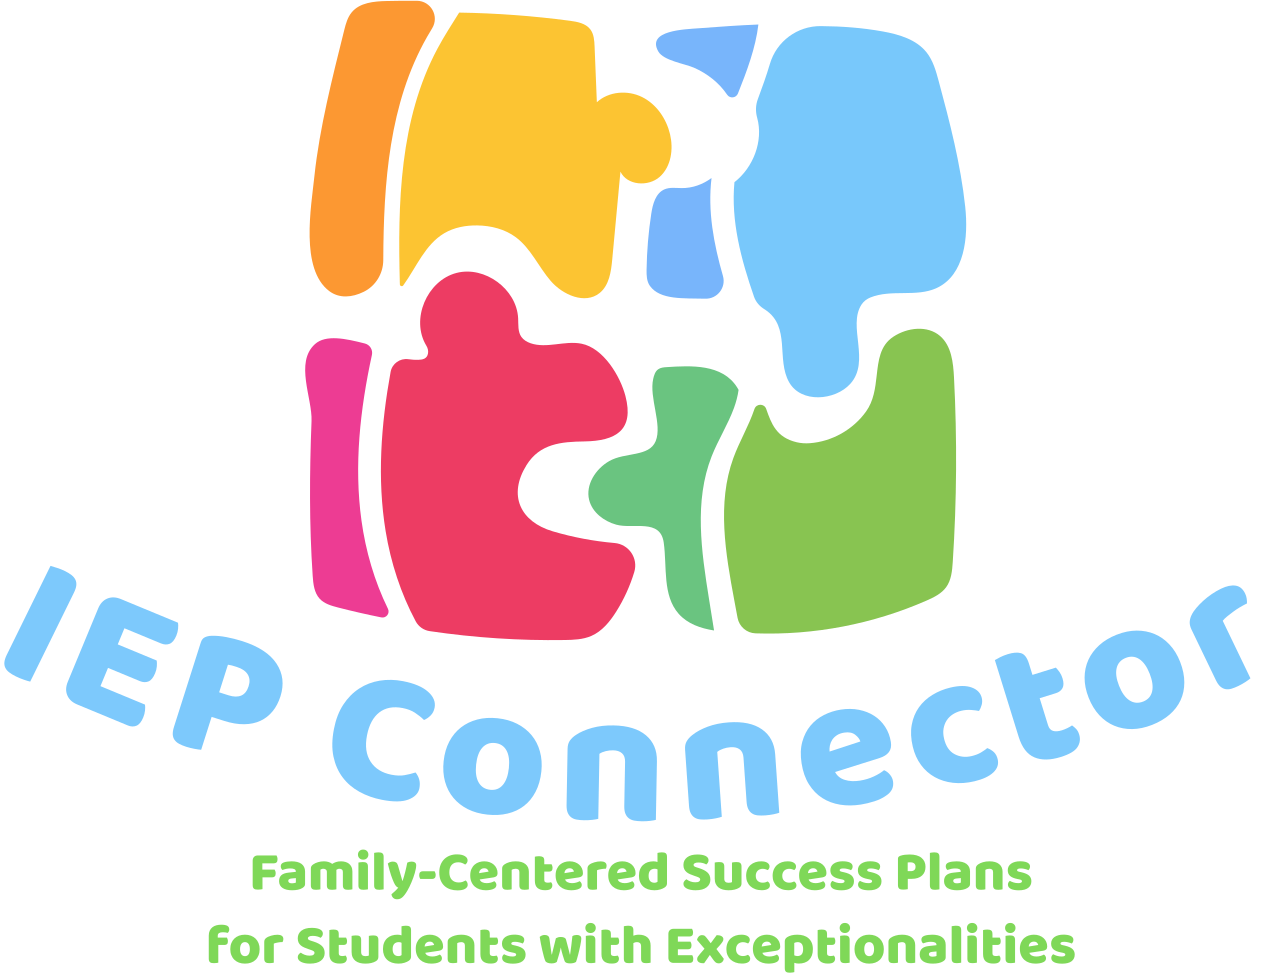 IEP Connector's logo